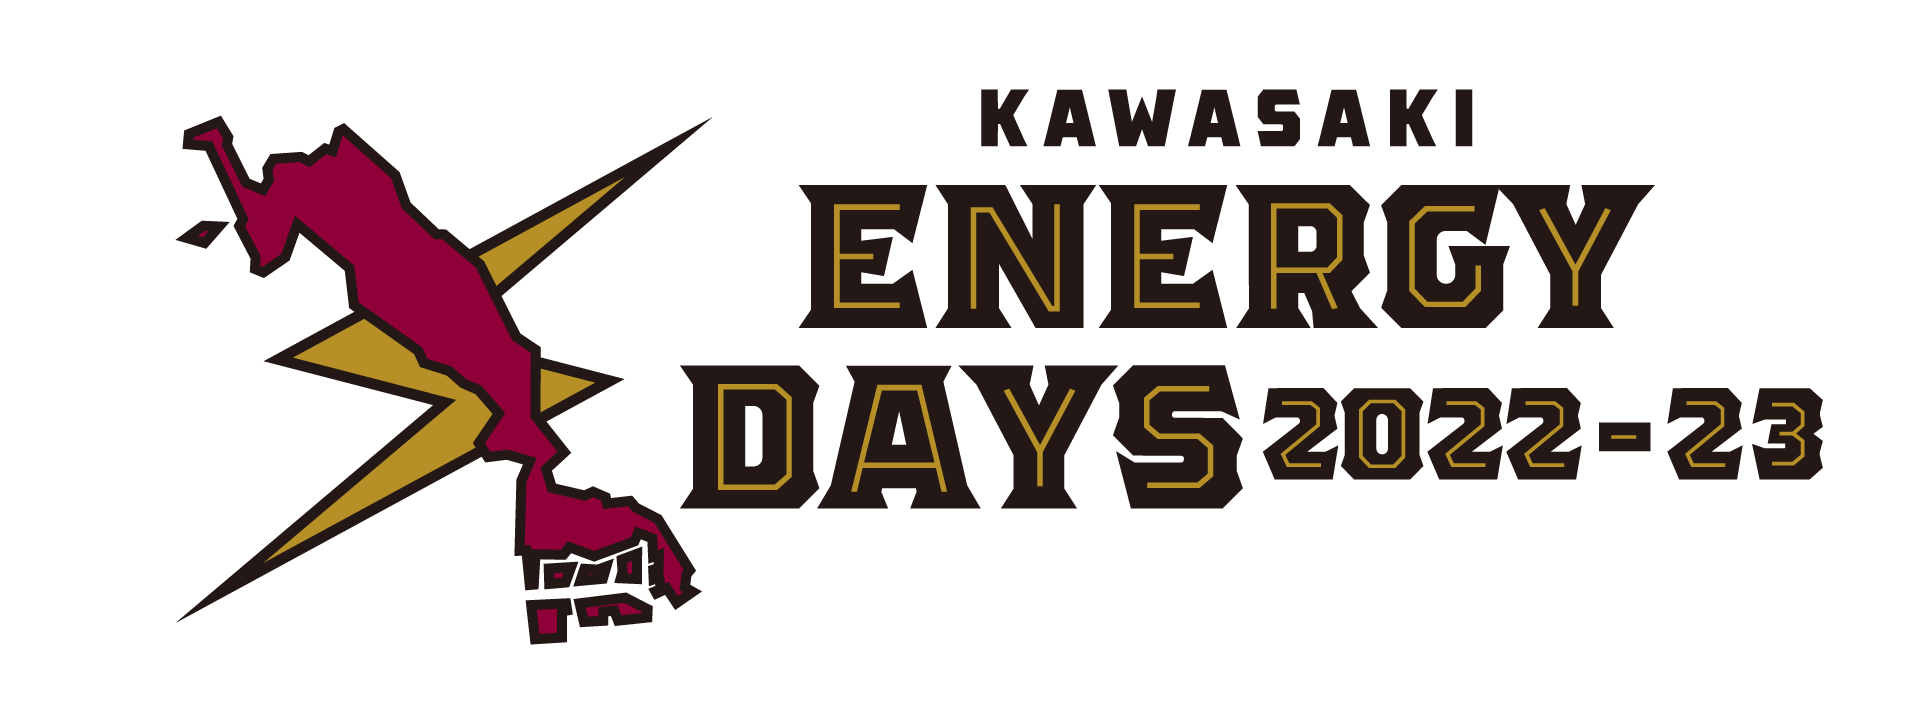 KAWASAKI ENERGY DAYS 2022-23